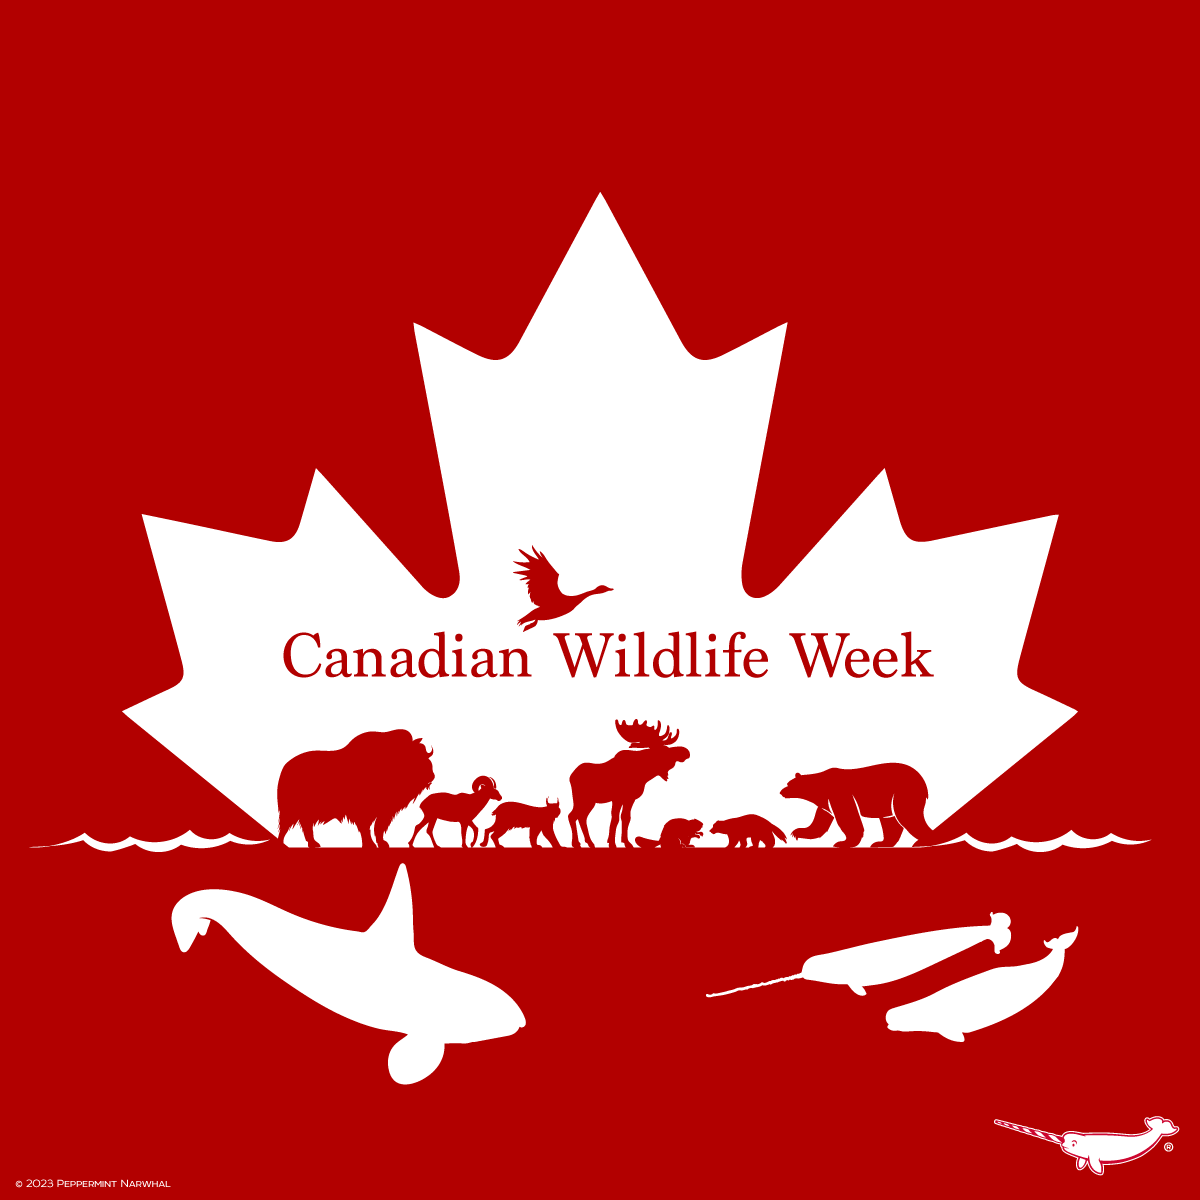 Happy #CanadianWildlifeWeek!

Shop the #PeppermintNarwhal store:
peppermintnarwhal.com

#CanadianAnimals #CanadianAnimals #CanadianWildlife #Canada #Wildlife